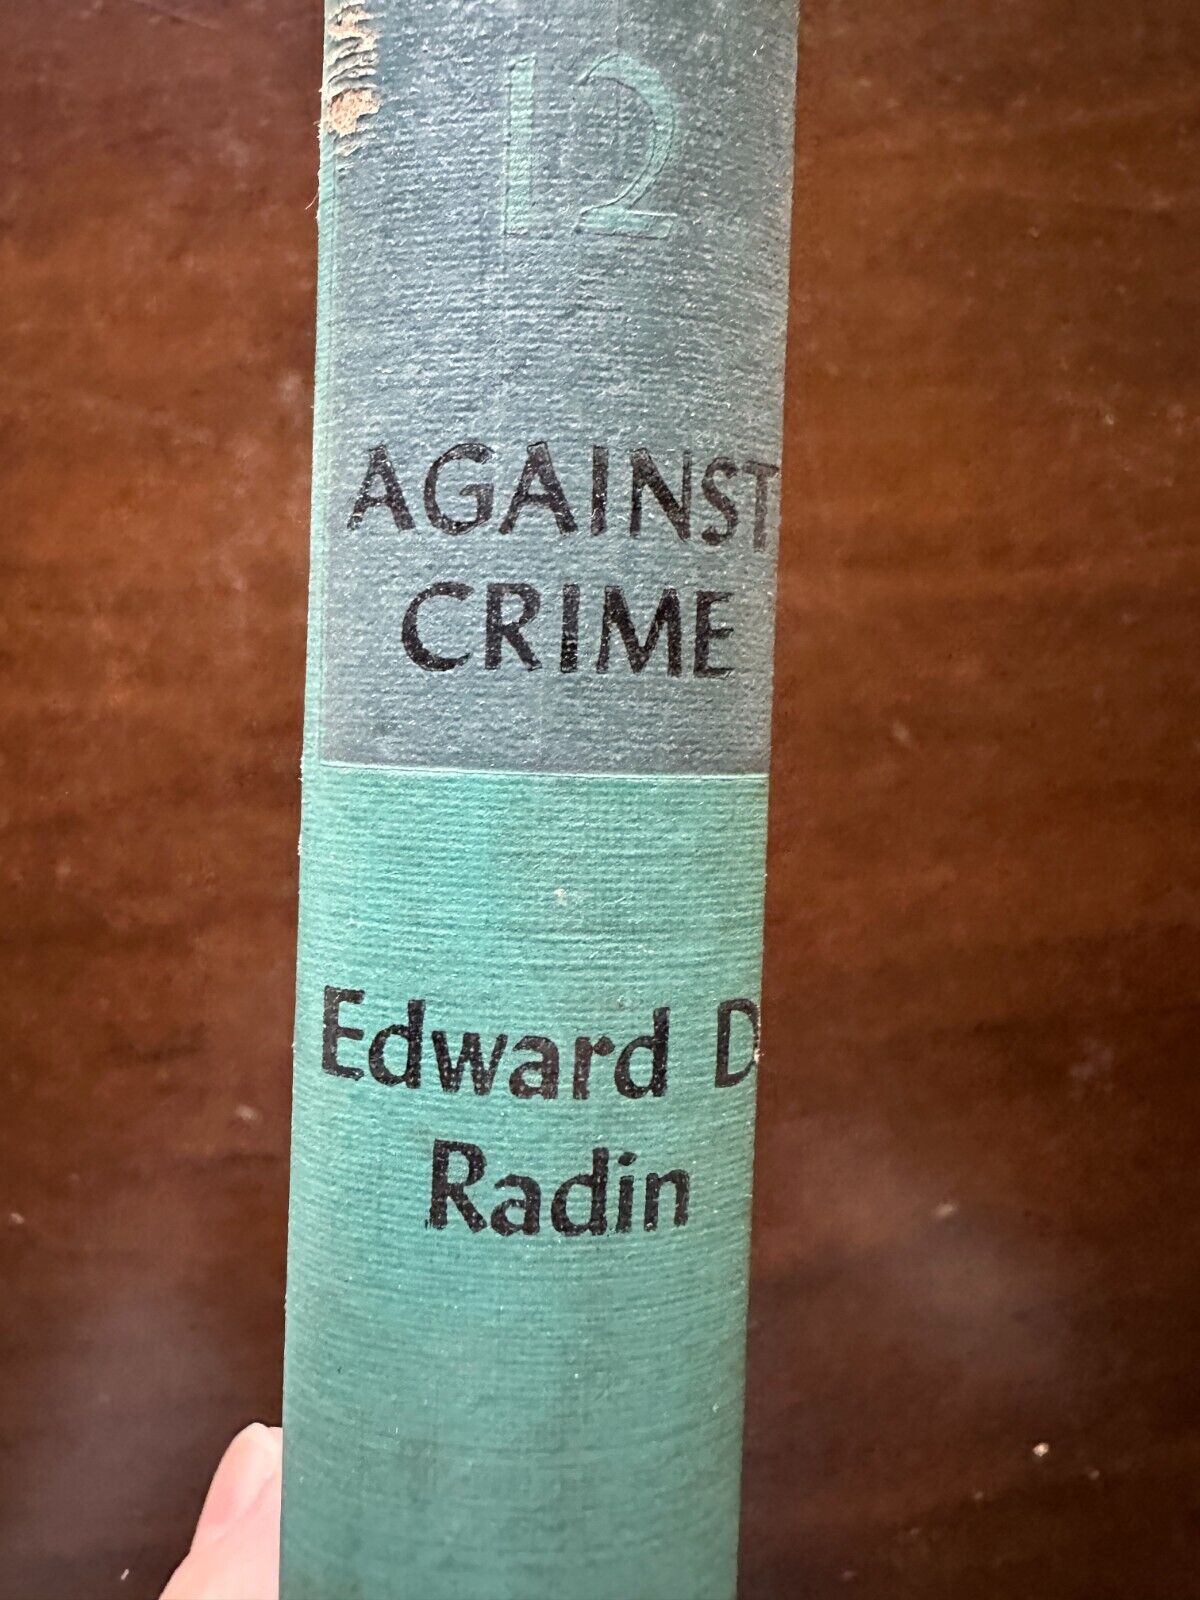 12 Against Crime by Edward D. Radin 1950